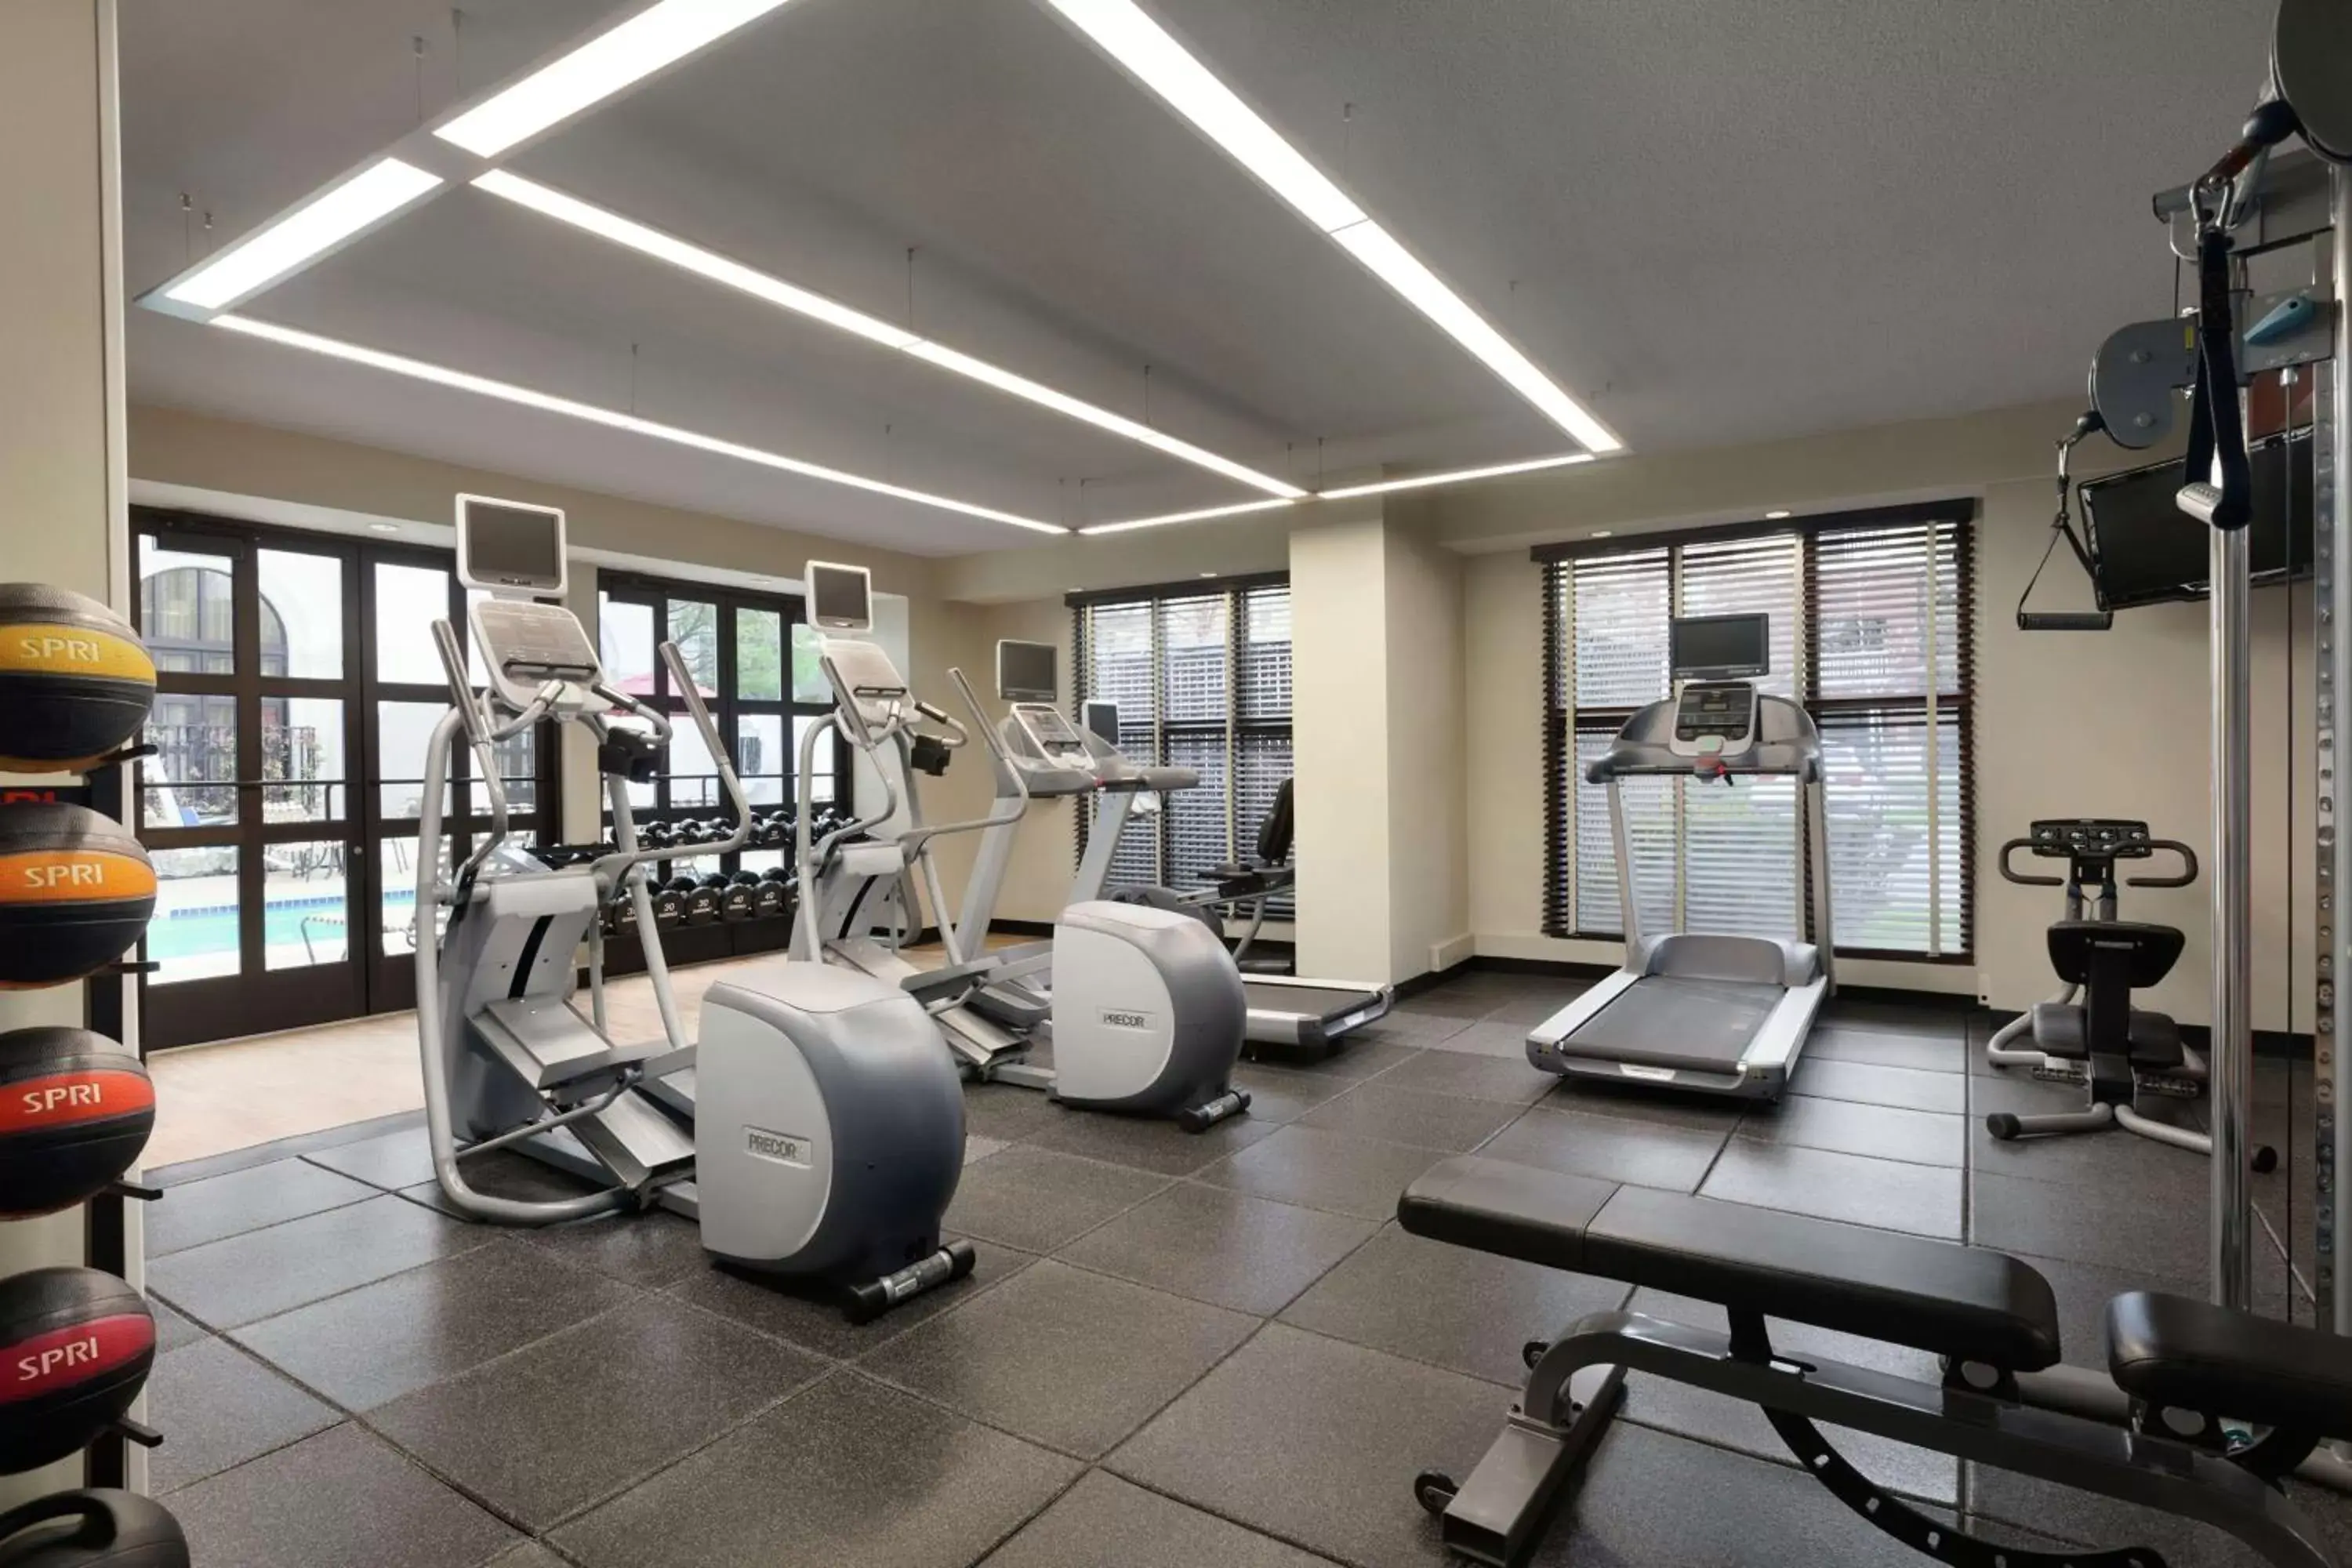 Fitness centre/facilities, Fitness Center/Facilities in Hilton Garden Inn Cupertino